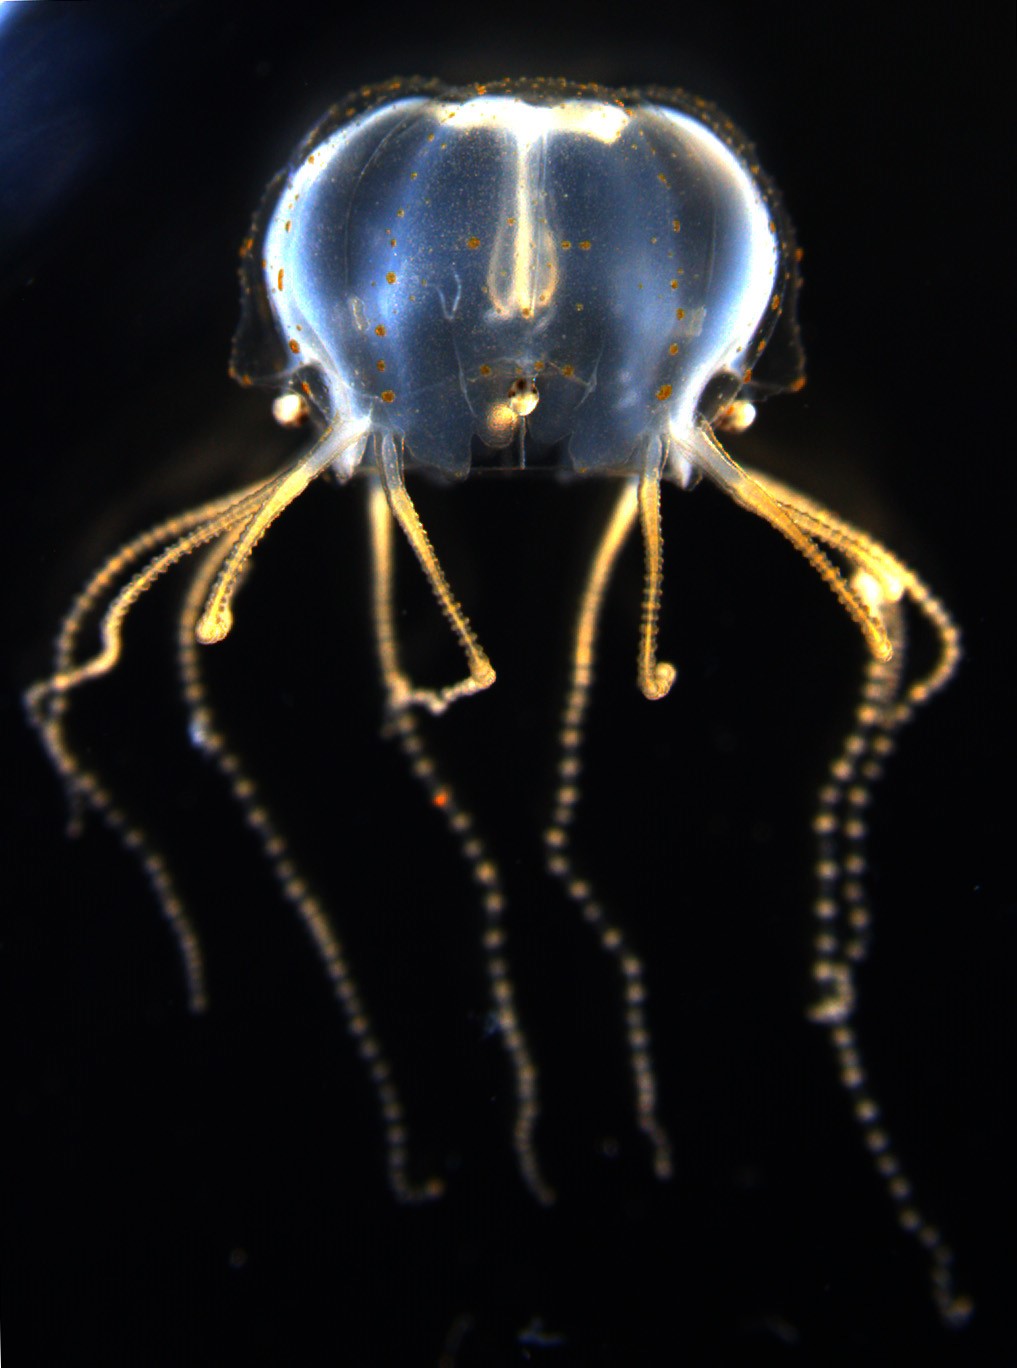 Cubozoan jellyfish Tripedalia. Photo by K.Khalturin